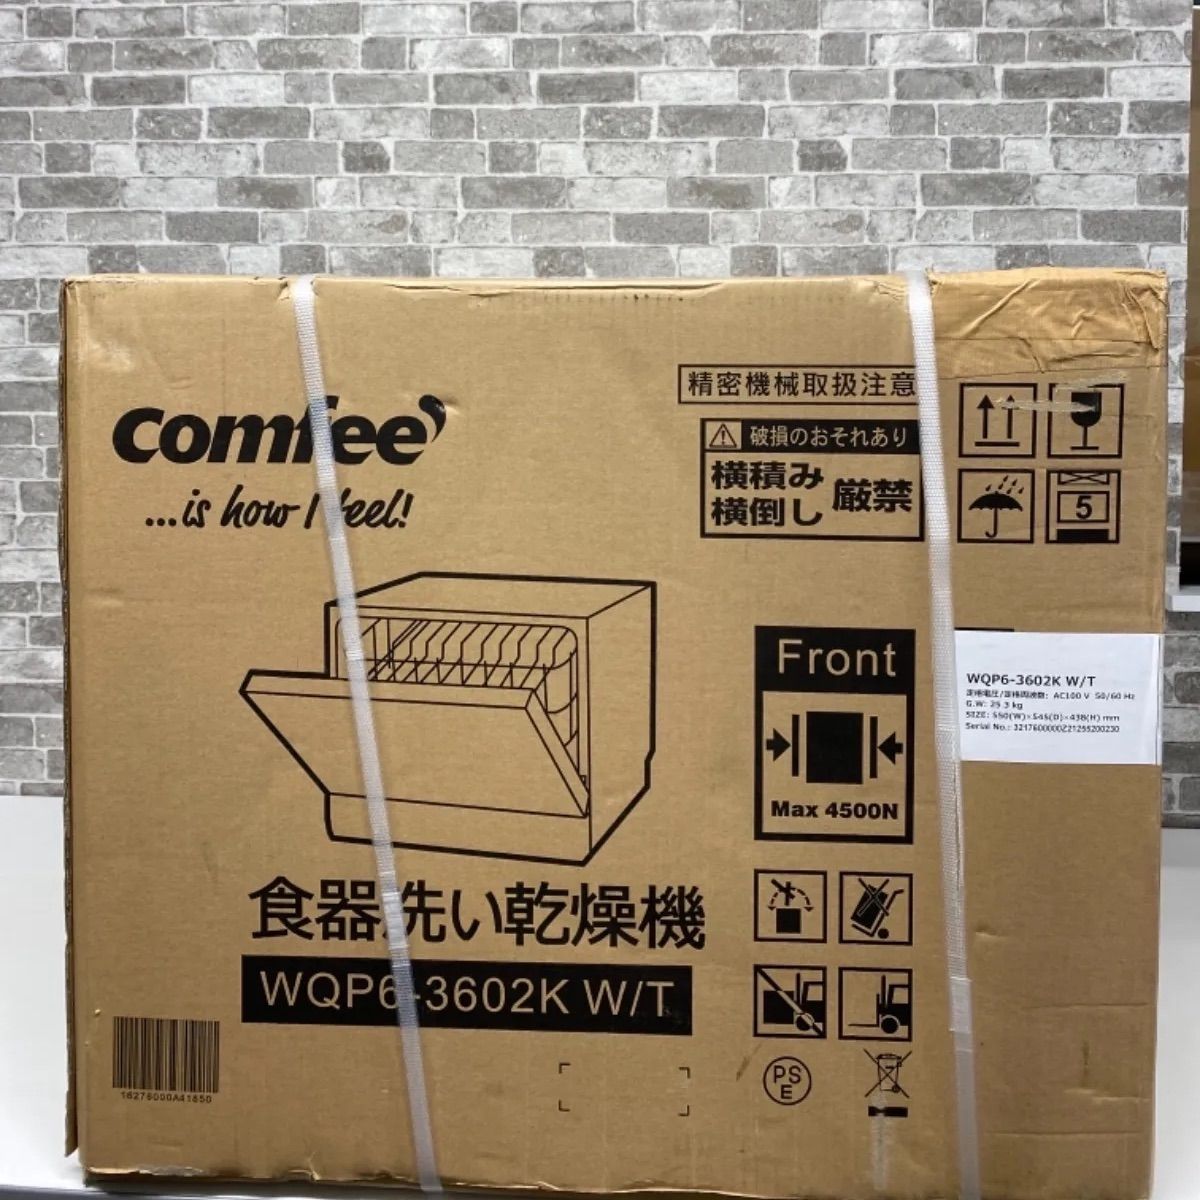 COMFEE' 食洗機 食器洗い乾燥機 WQP6-3602K W/T - オオナミ - メルカリ